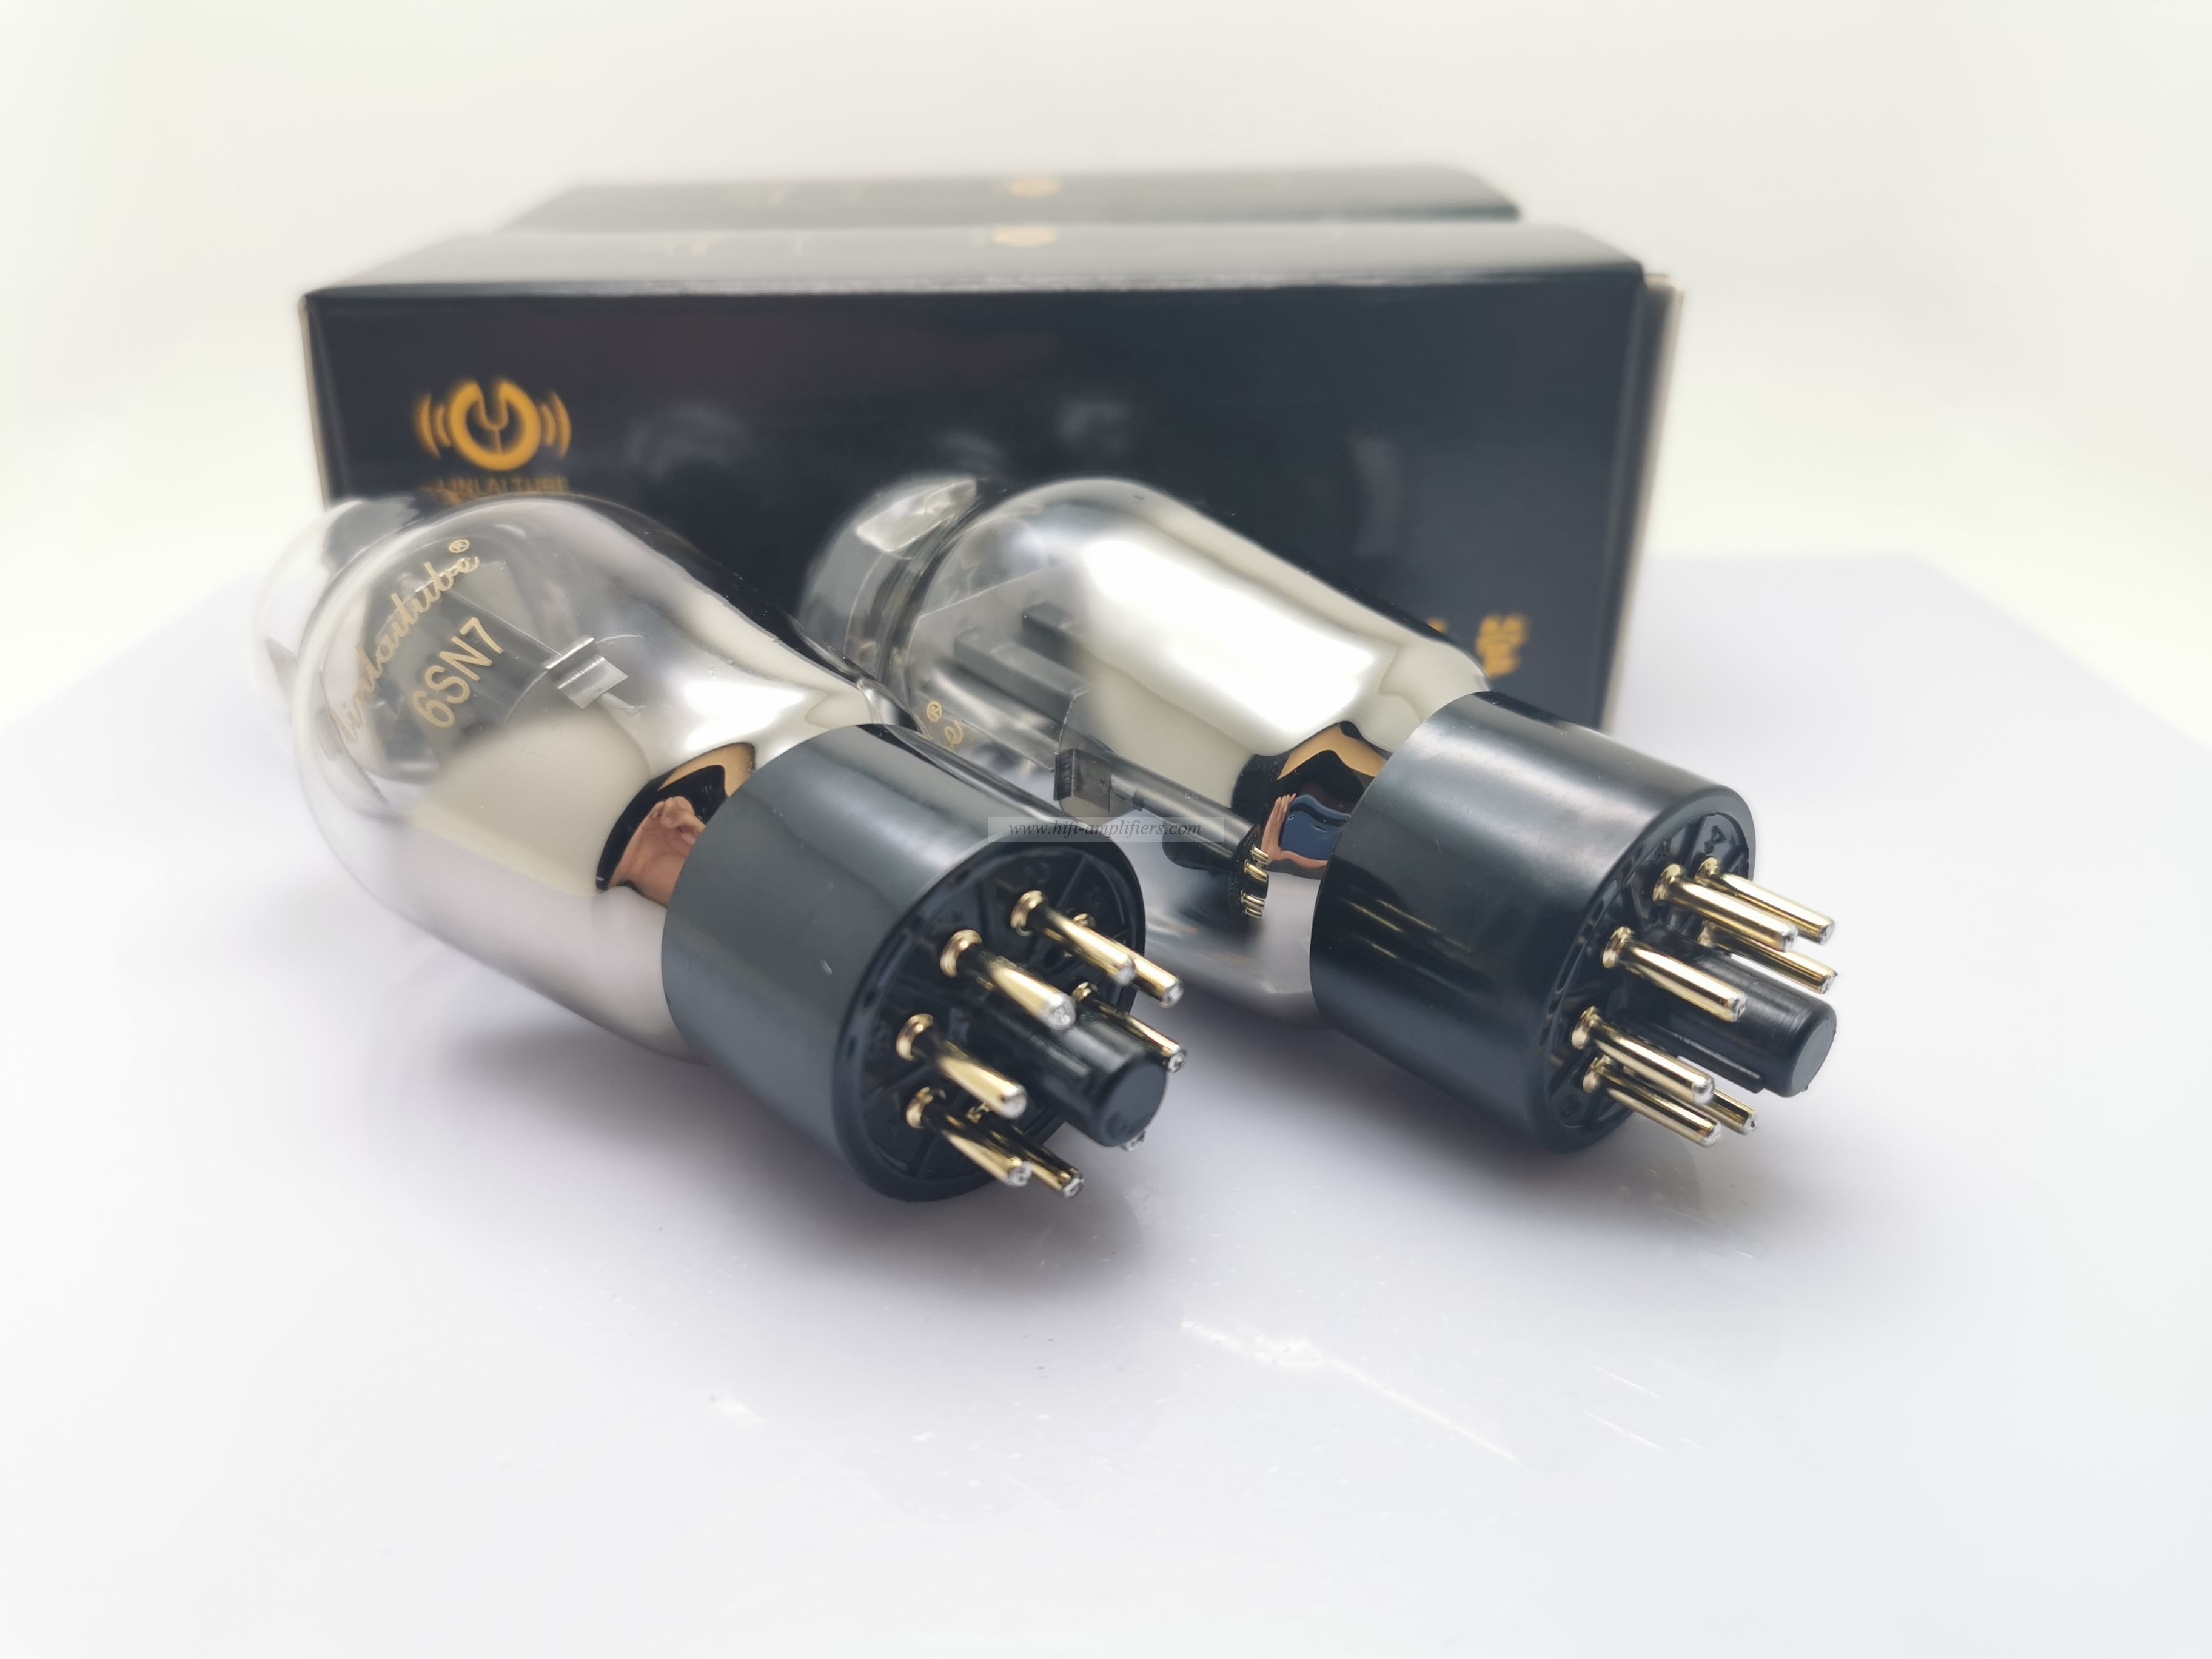 LINLAI 6SN7 Vacuum Tube HIFI Audio Valve Replaces 6H8C/6N8P/CV181 Electronic Tube Matched Pair